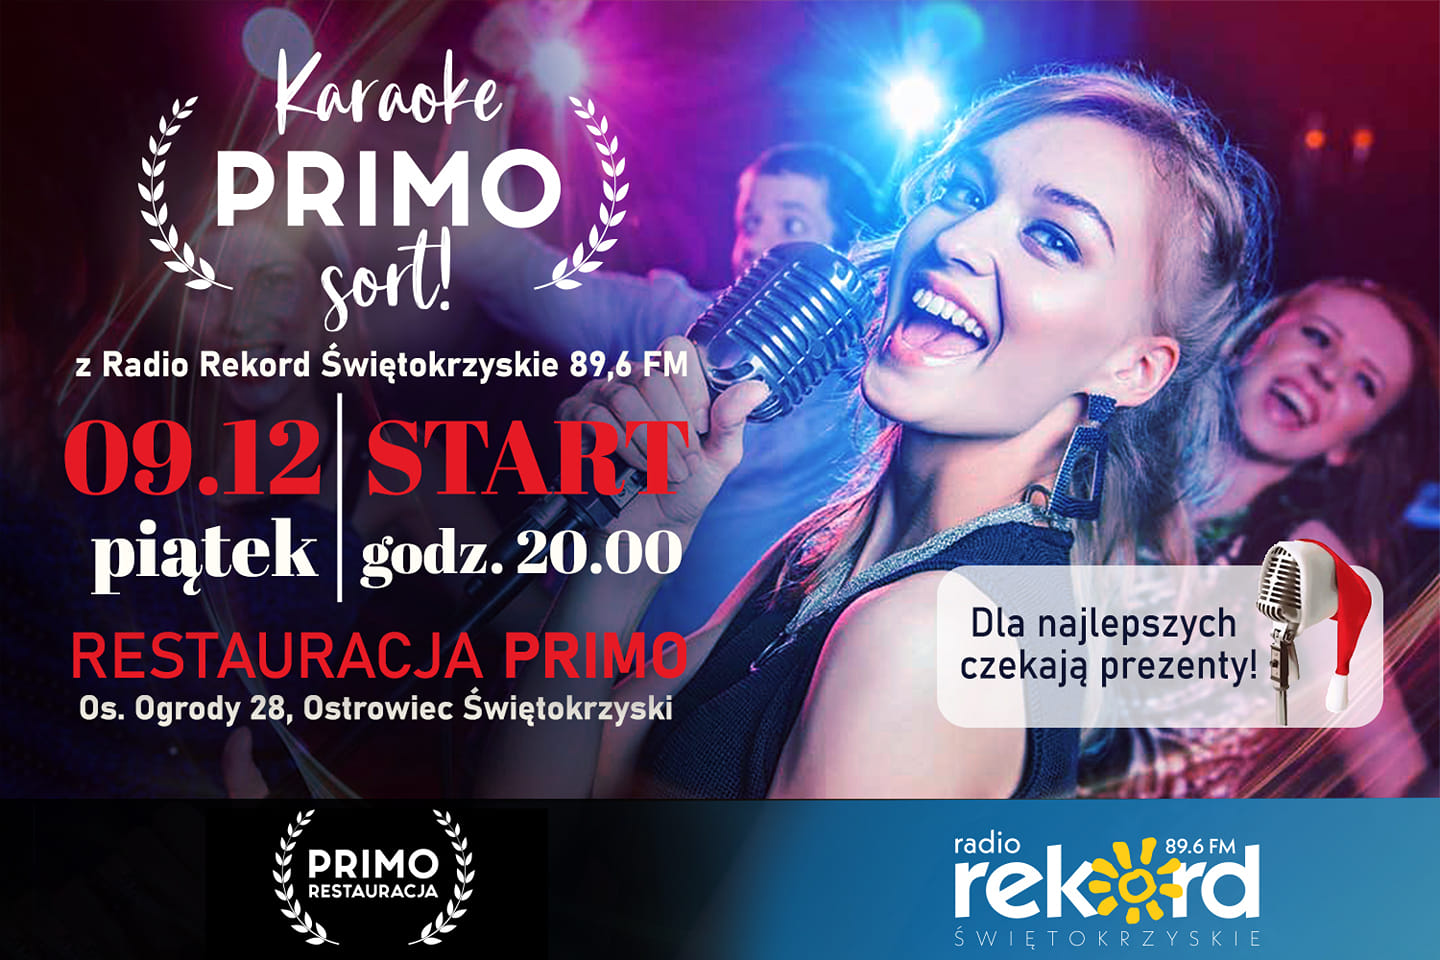 Mikołajkowe karaoke „PRIMO sort” z Radiem Rekord 89,6 FM